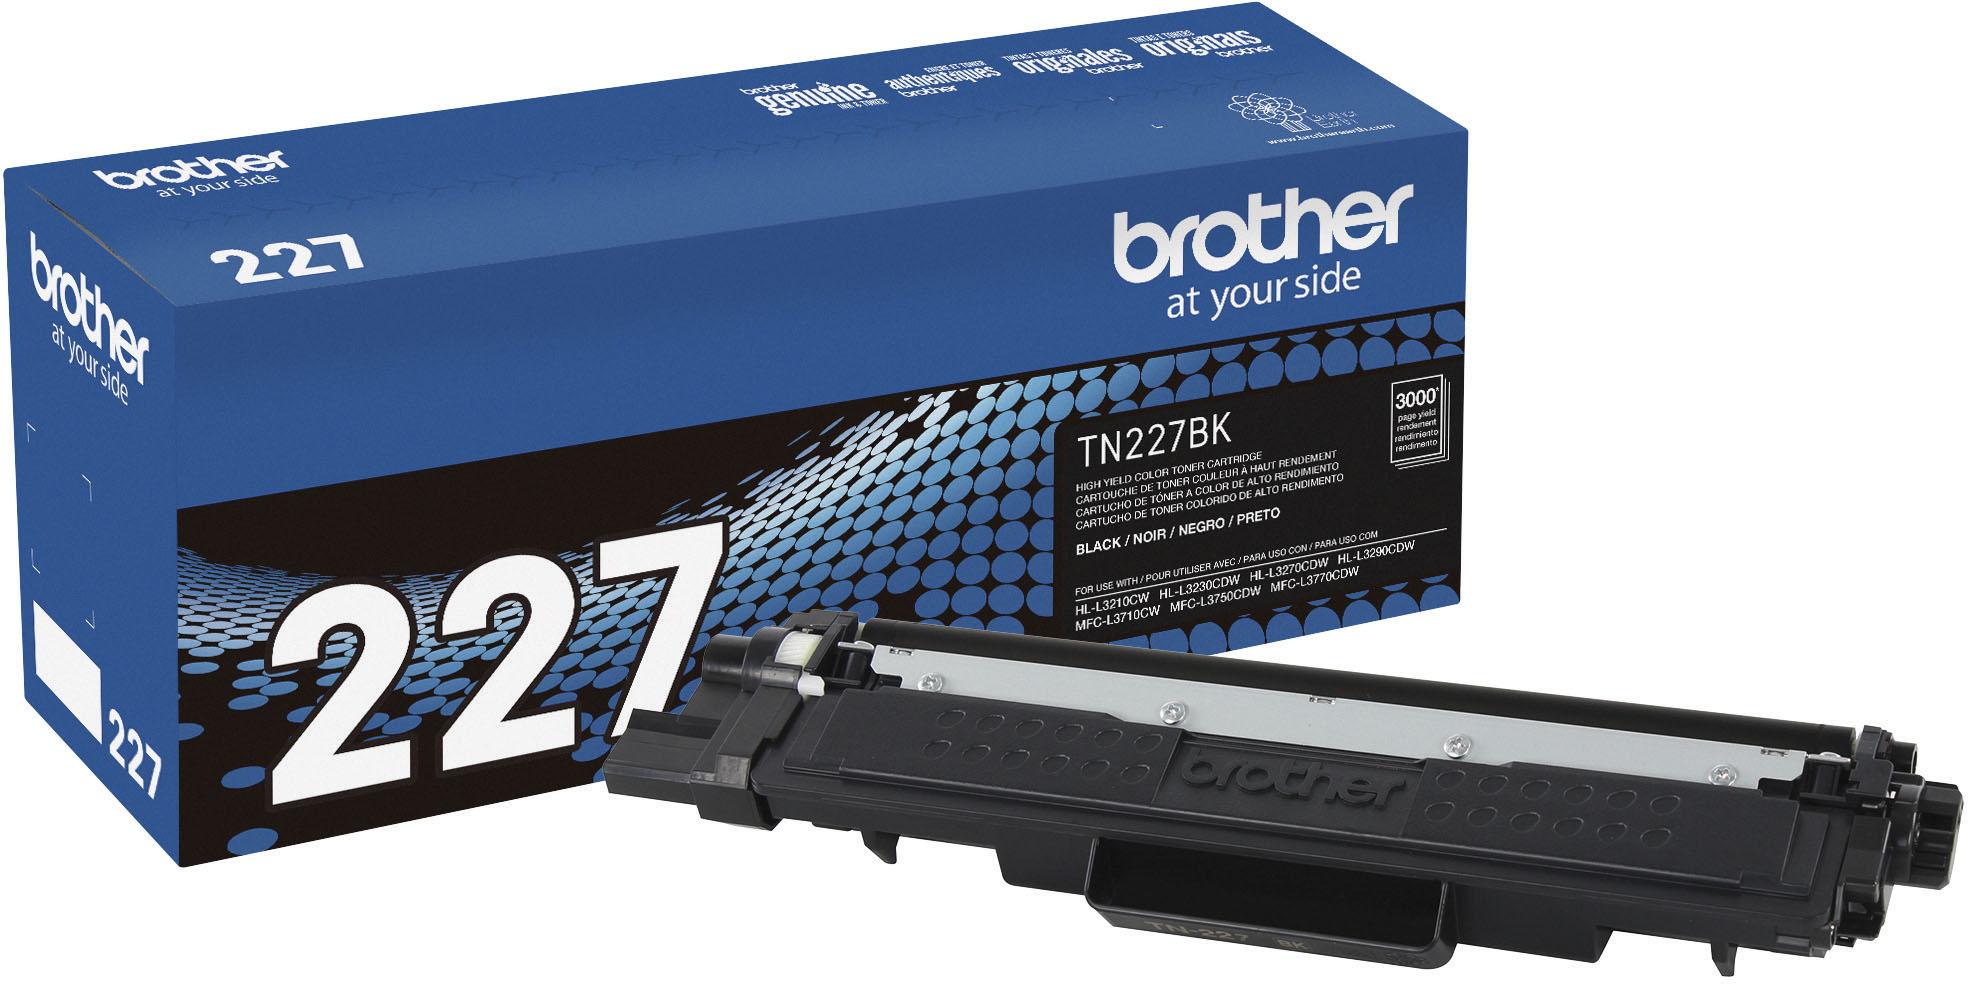 Brother Toner TN-243BK New Boxed HL-3210cw hl-3270cdw mfc-l3770cdw